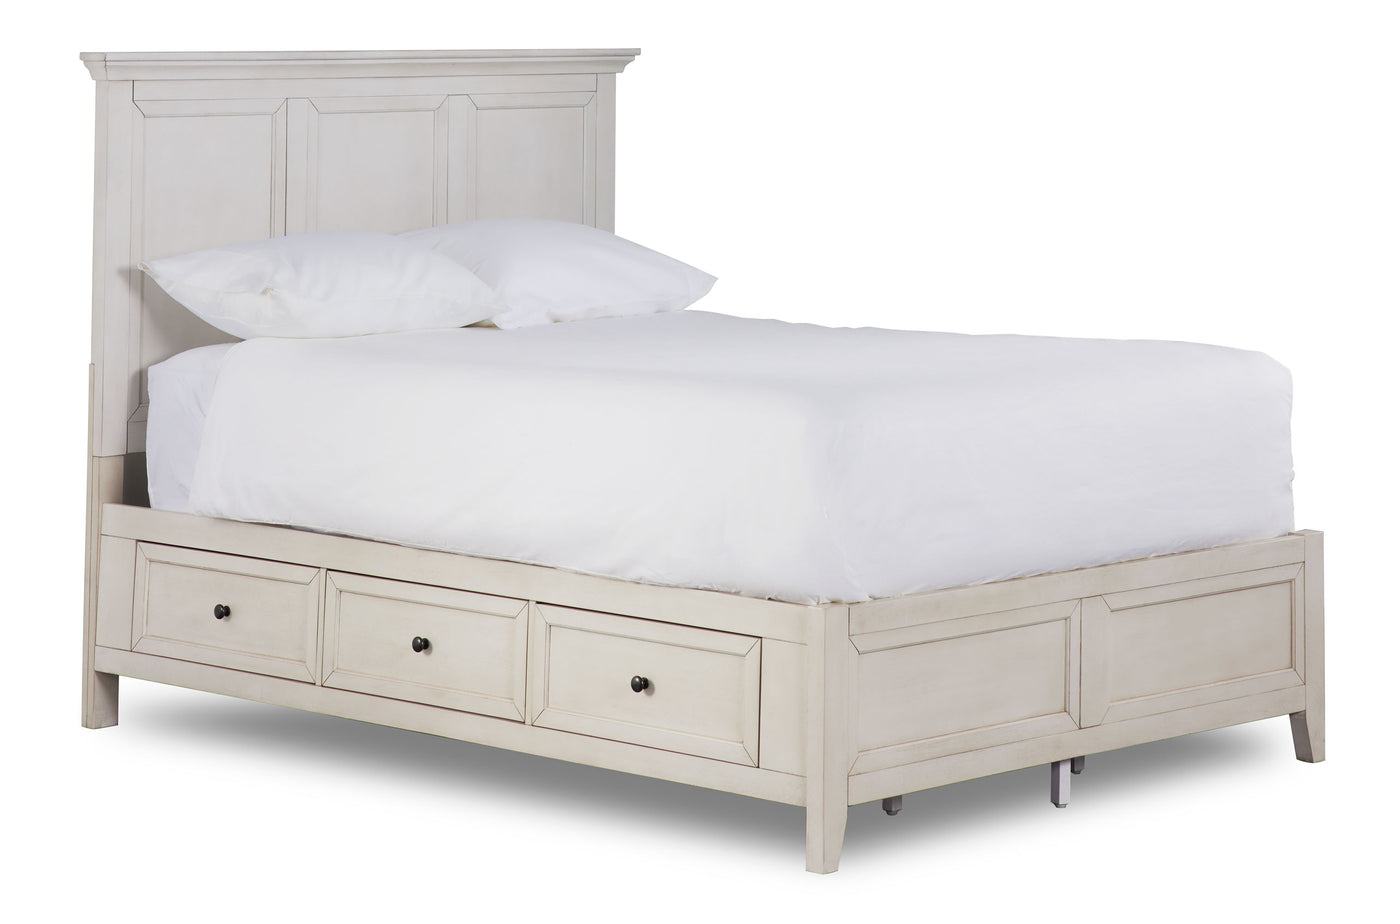 San Mateo 3-Piece King Storage Bed - Antique White